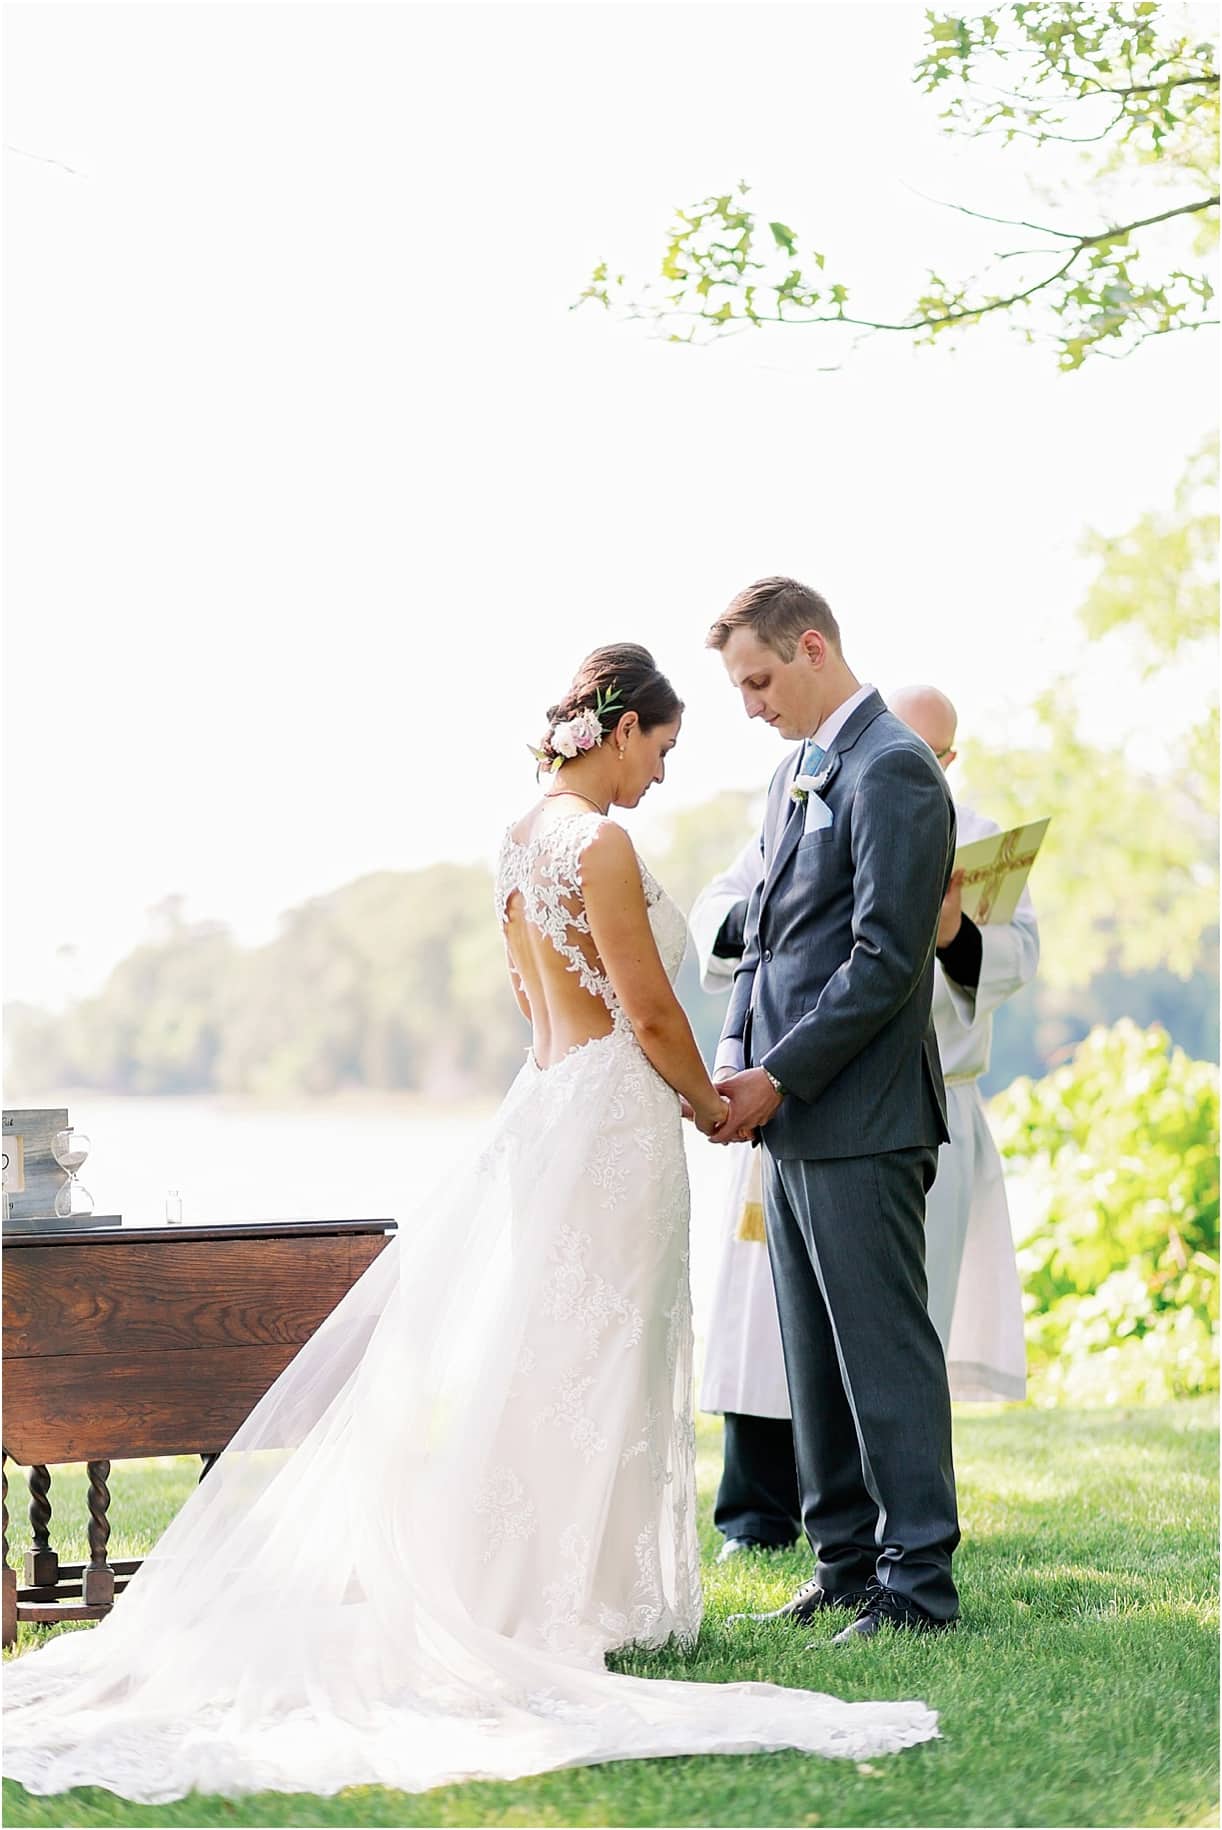 Cape Charles Wedding Venues | Blue Wedding | Hill City Bride Virginia Weddings Blog | Vows